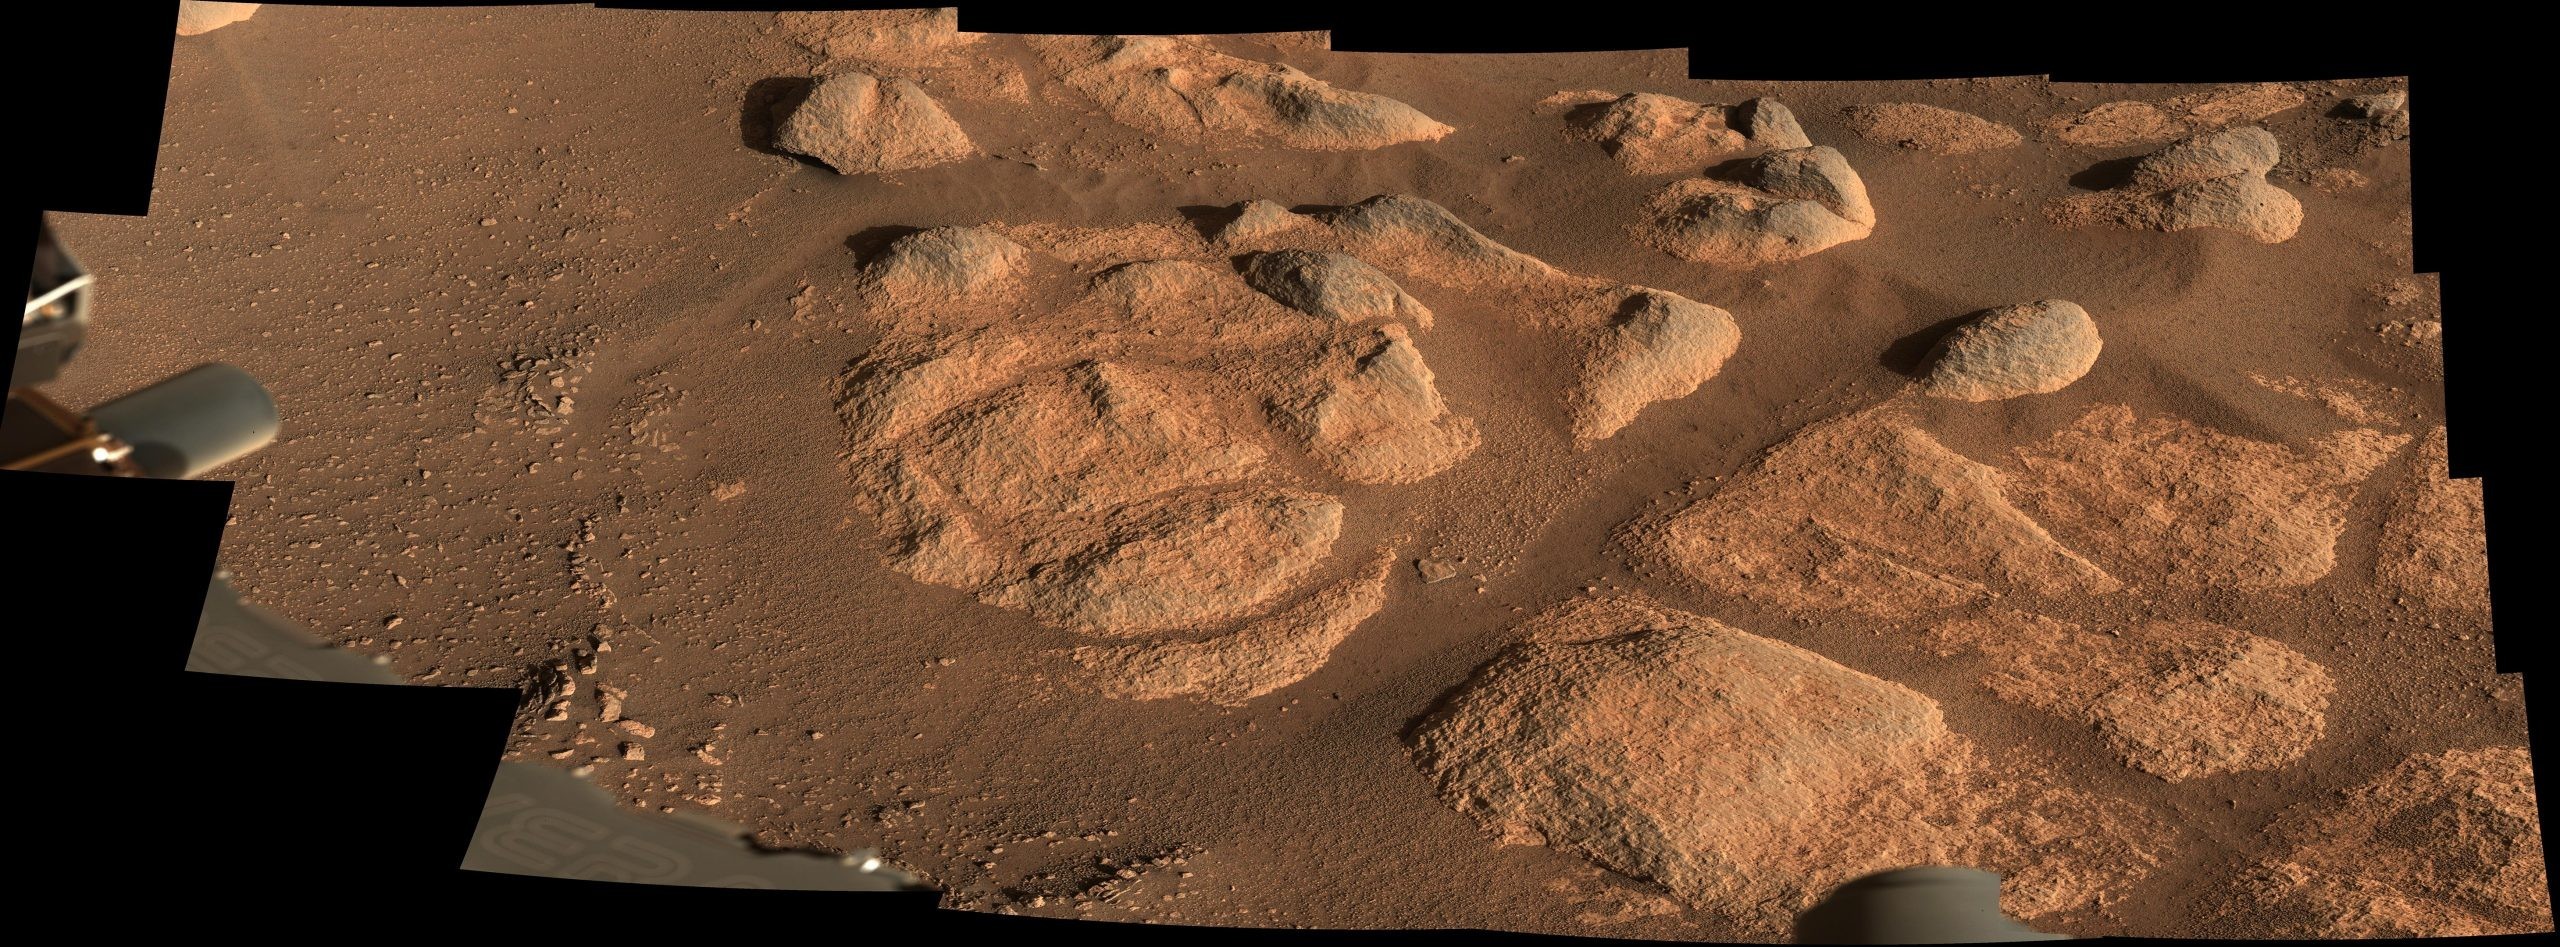 Новый камень на Марс